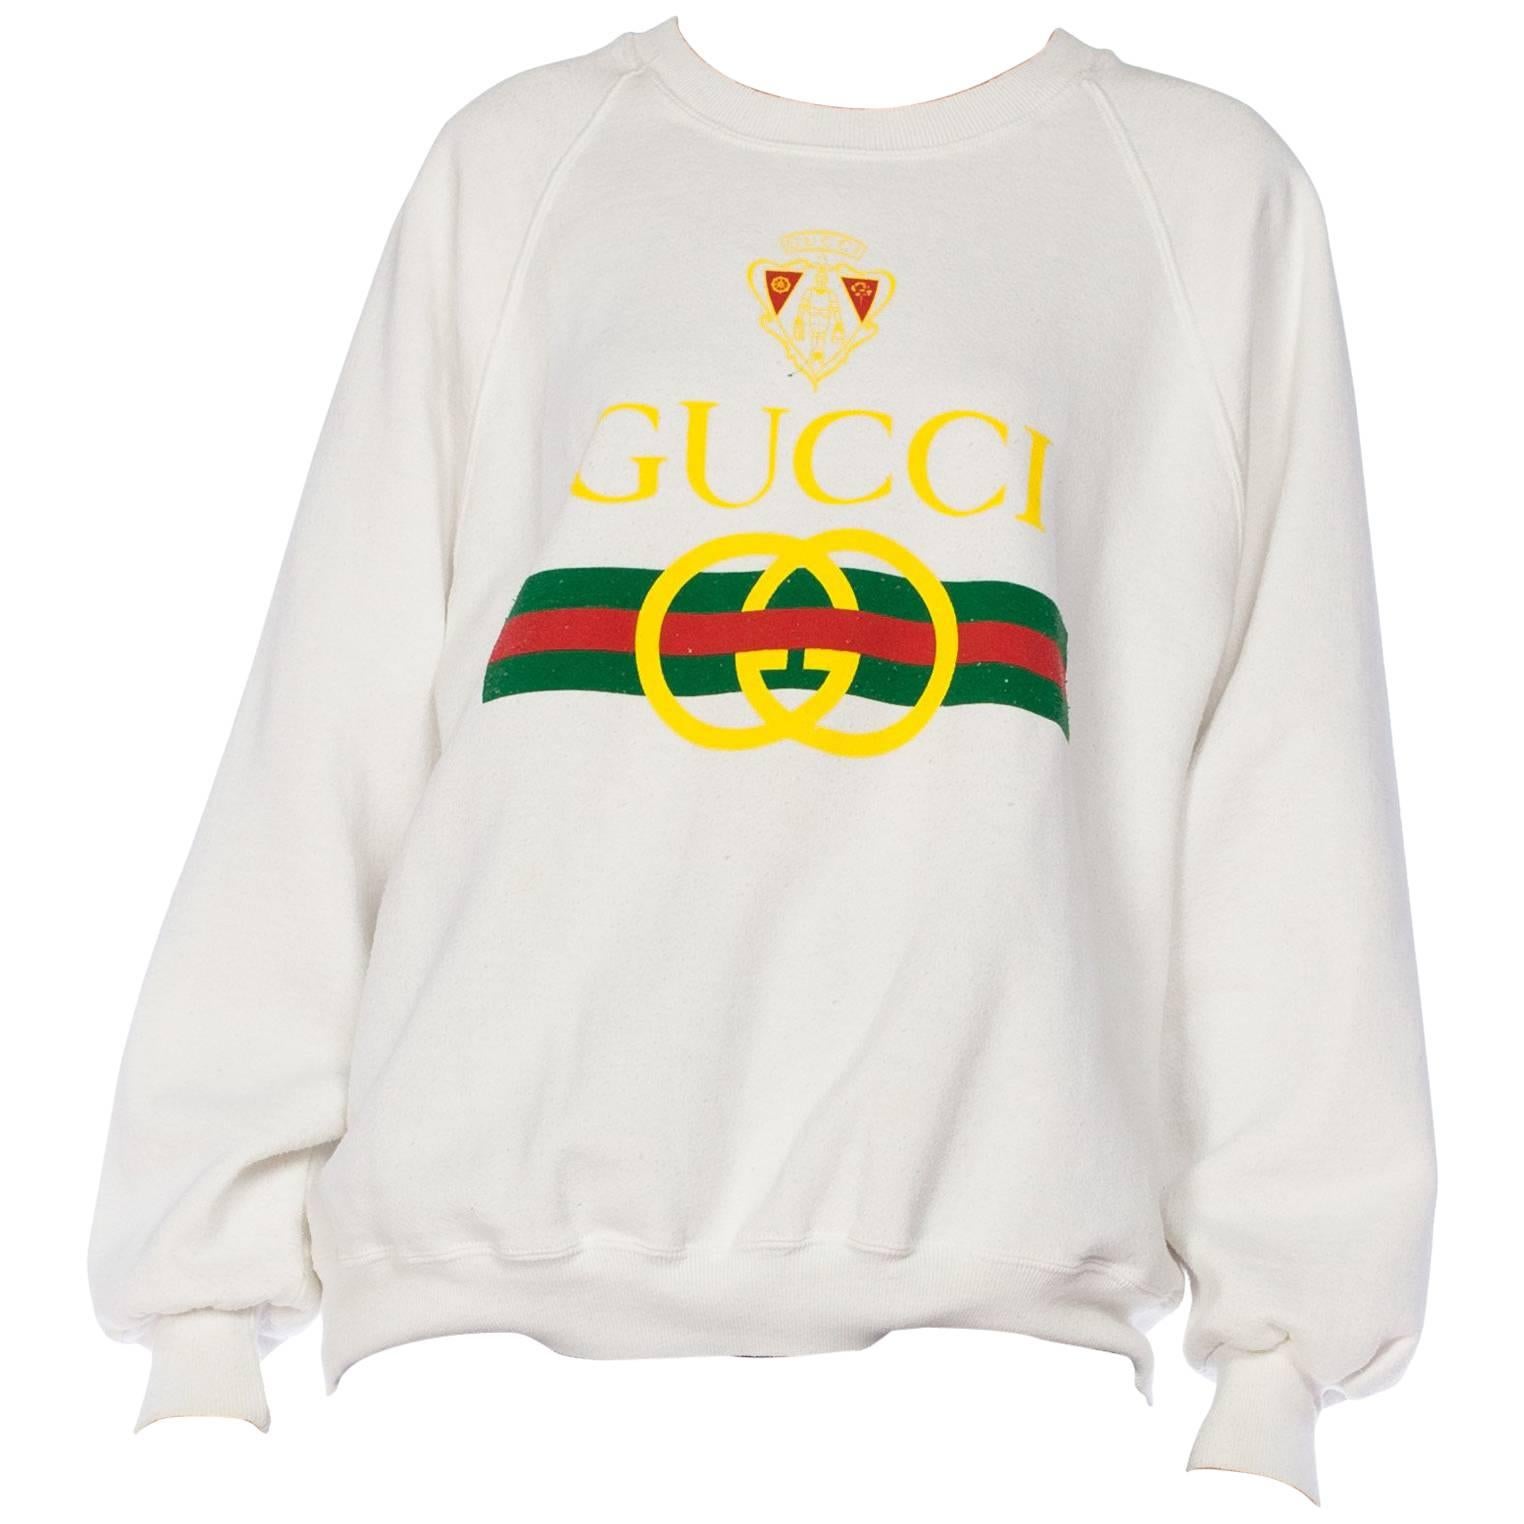 Gucci Bootleg 1980s Sweatshirt